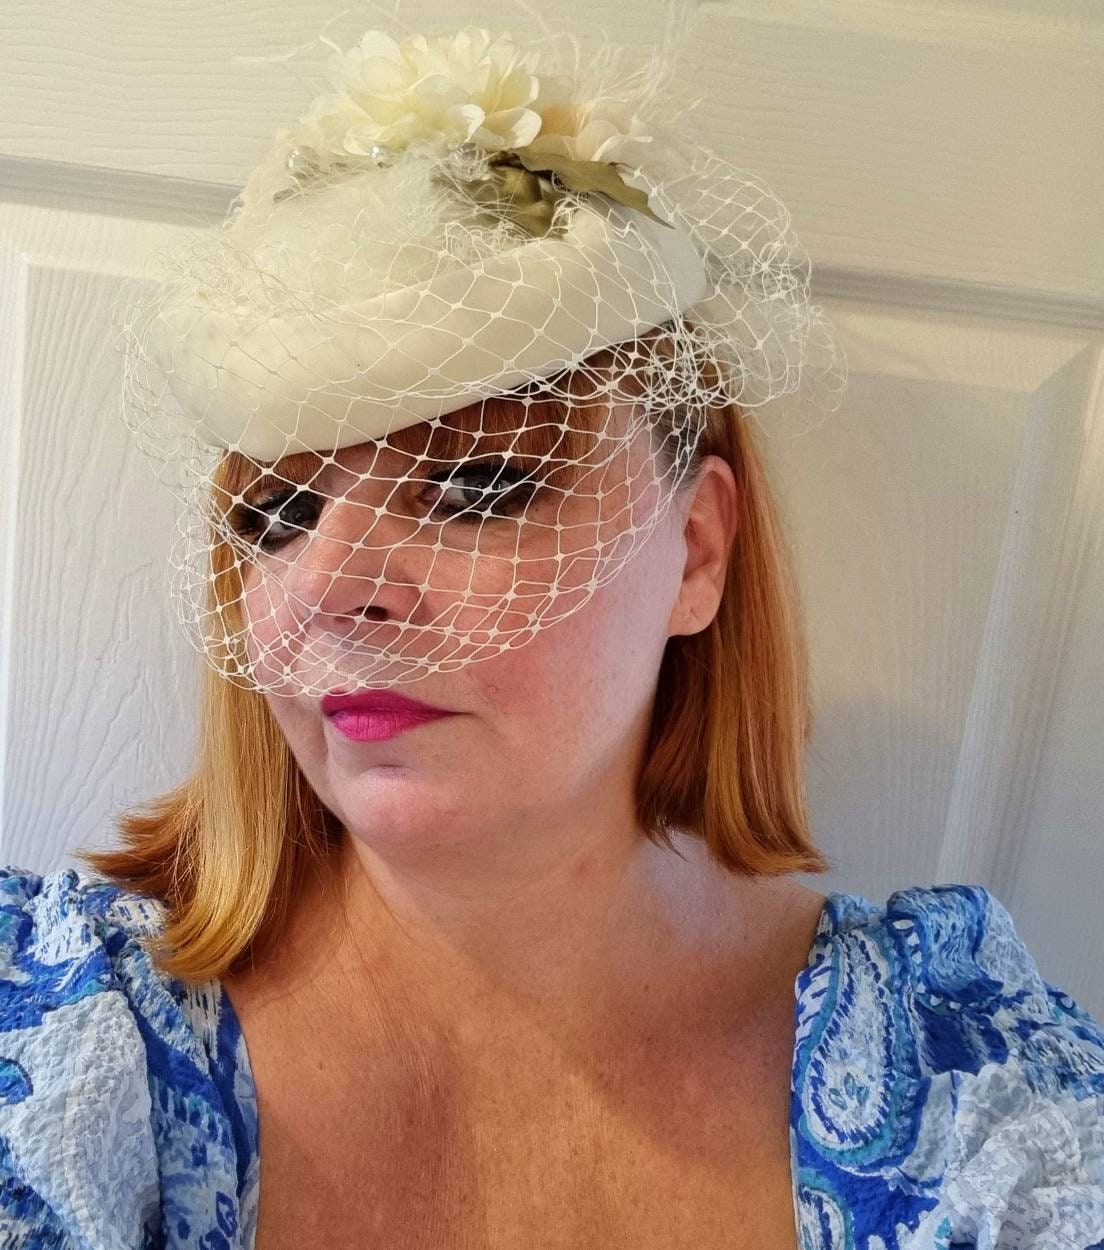 ivory cream peach flower pill box hat hatinator headpiece races wedding mother of the bride womens